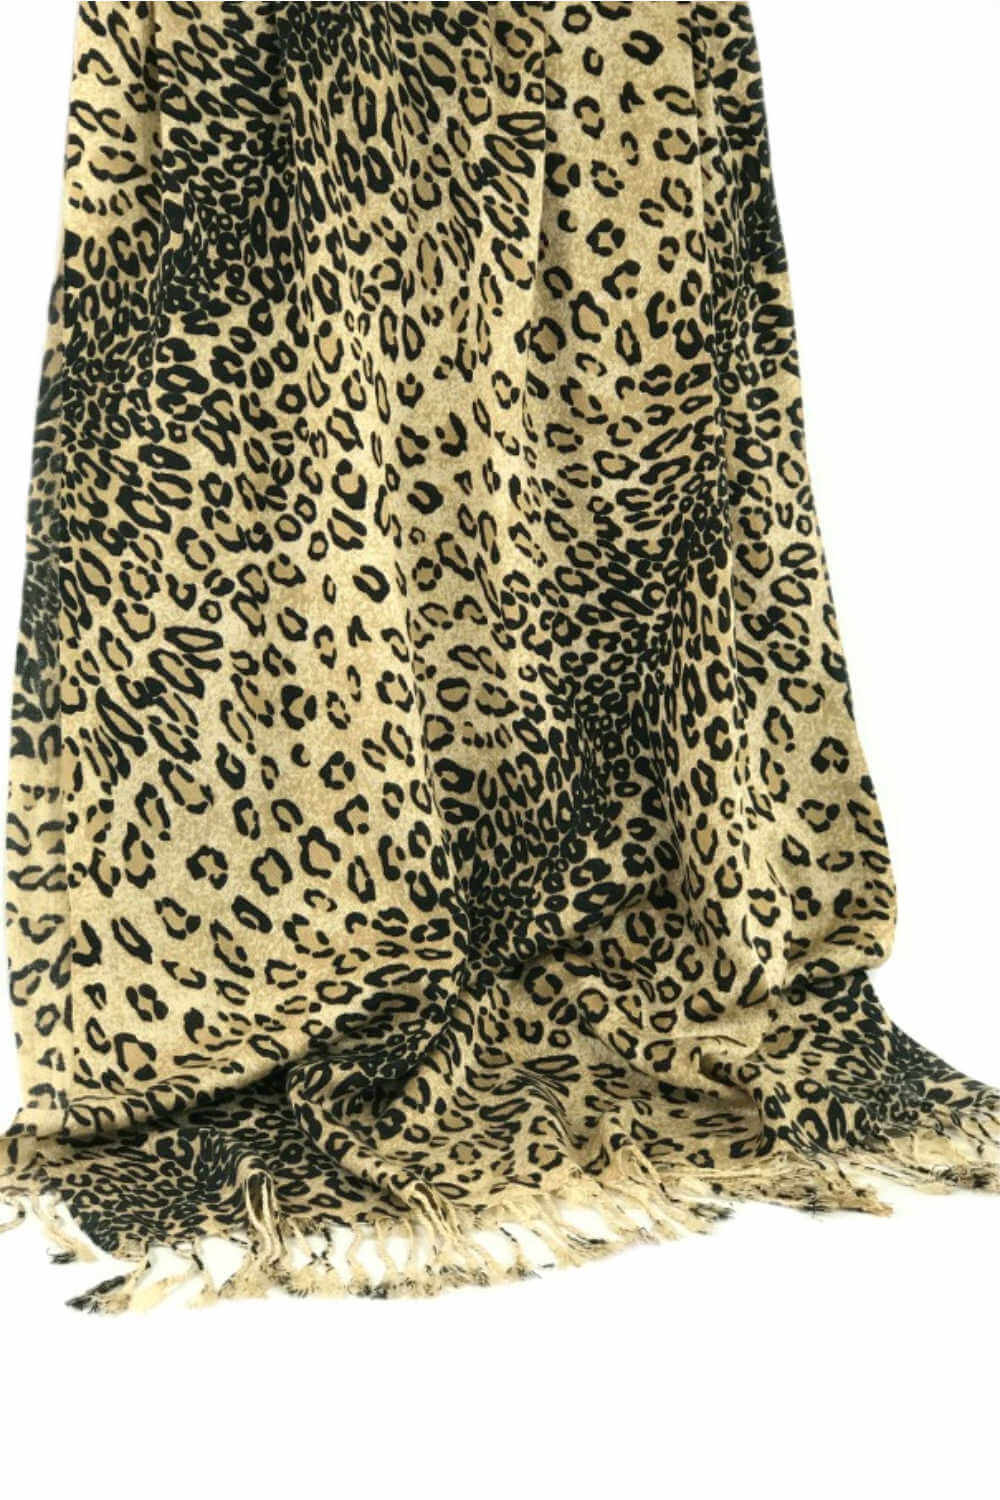 leopard-print-scarf-winter-shawl-brown-black-cream